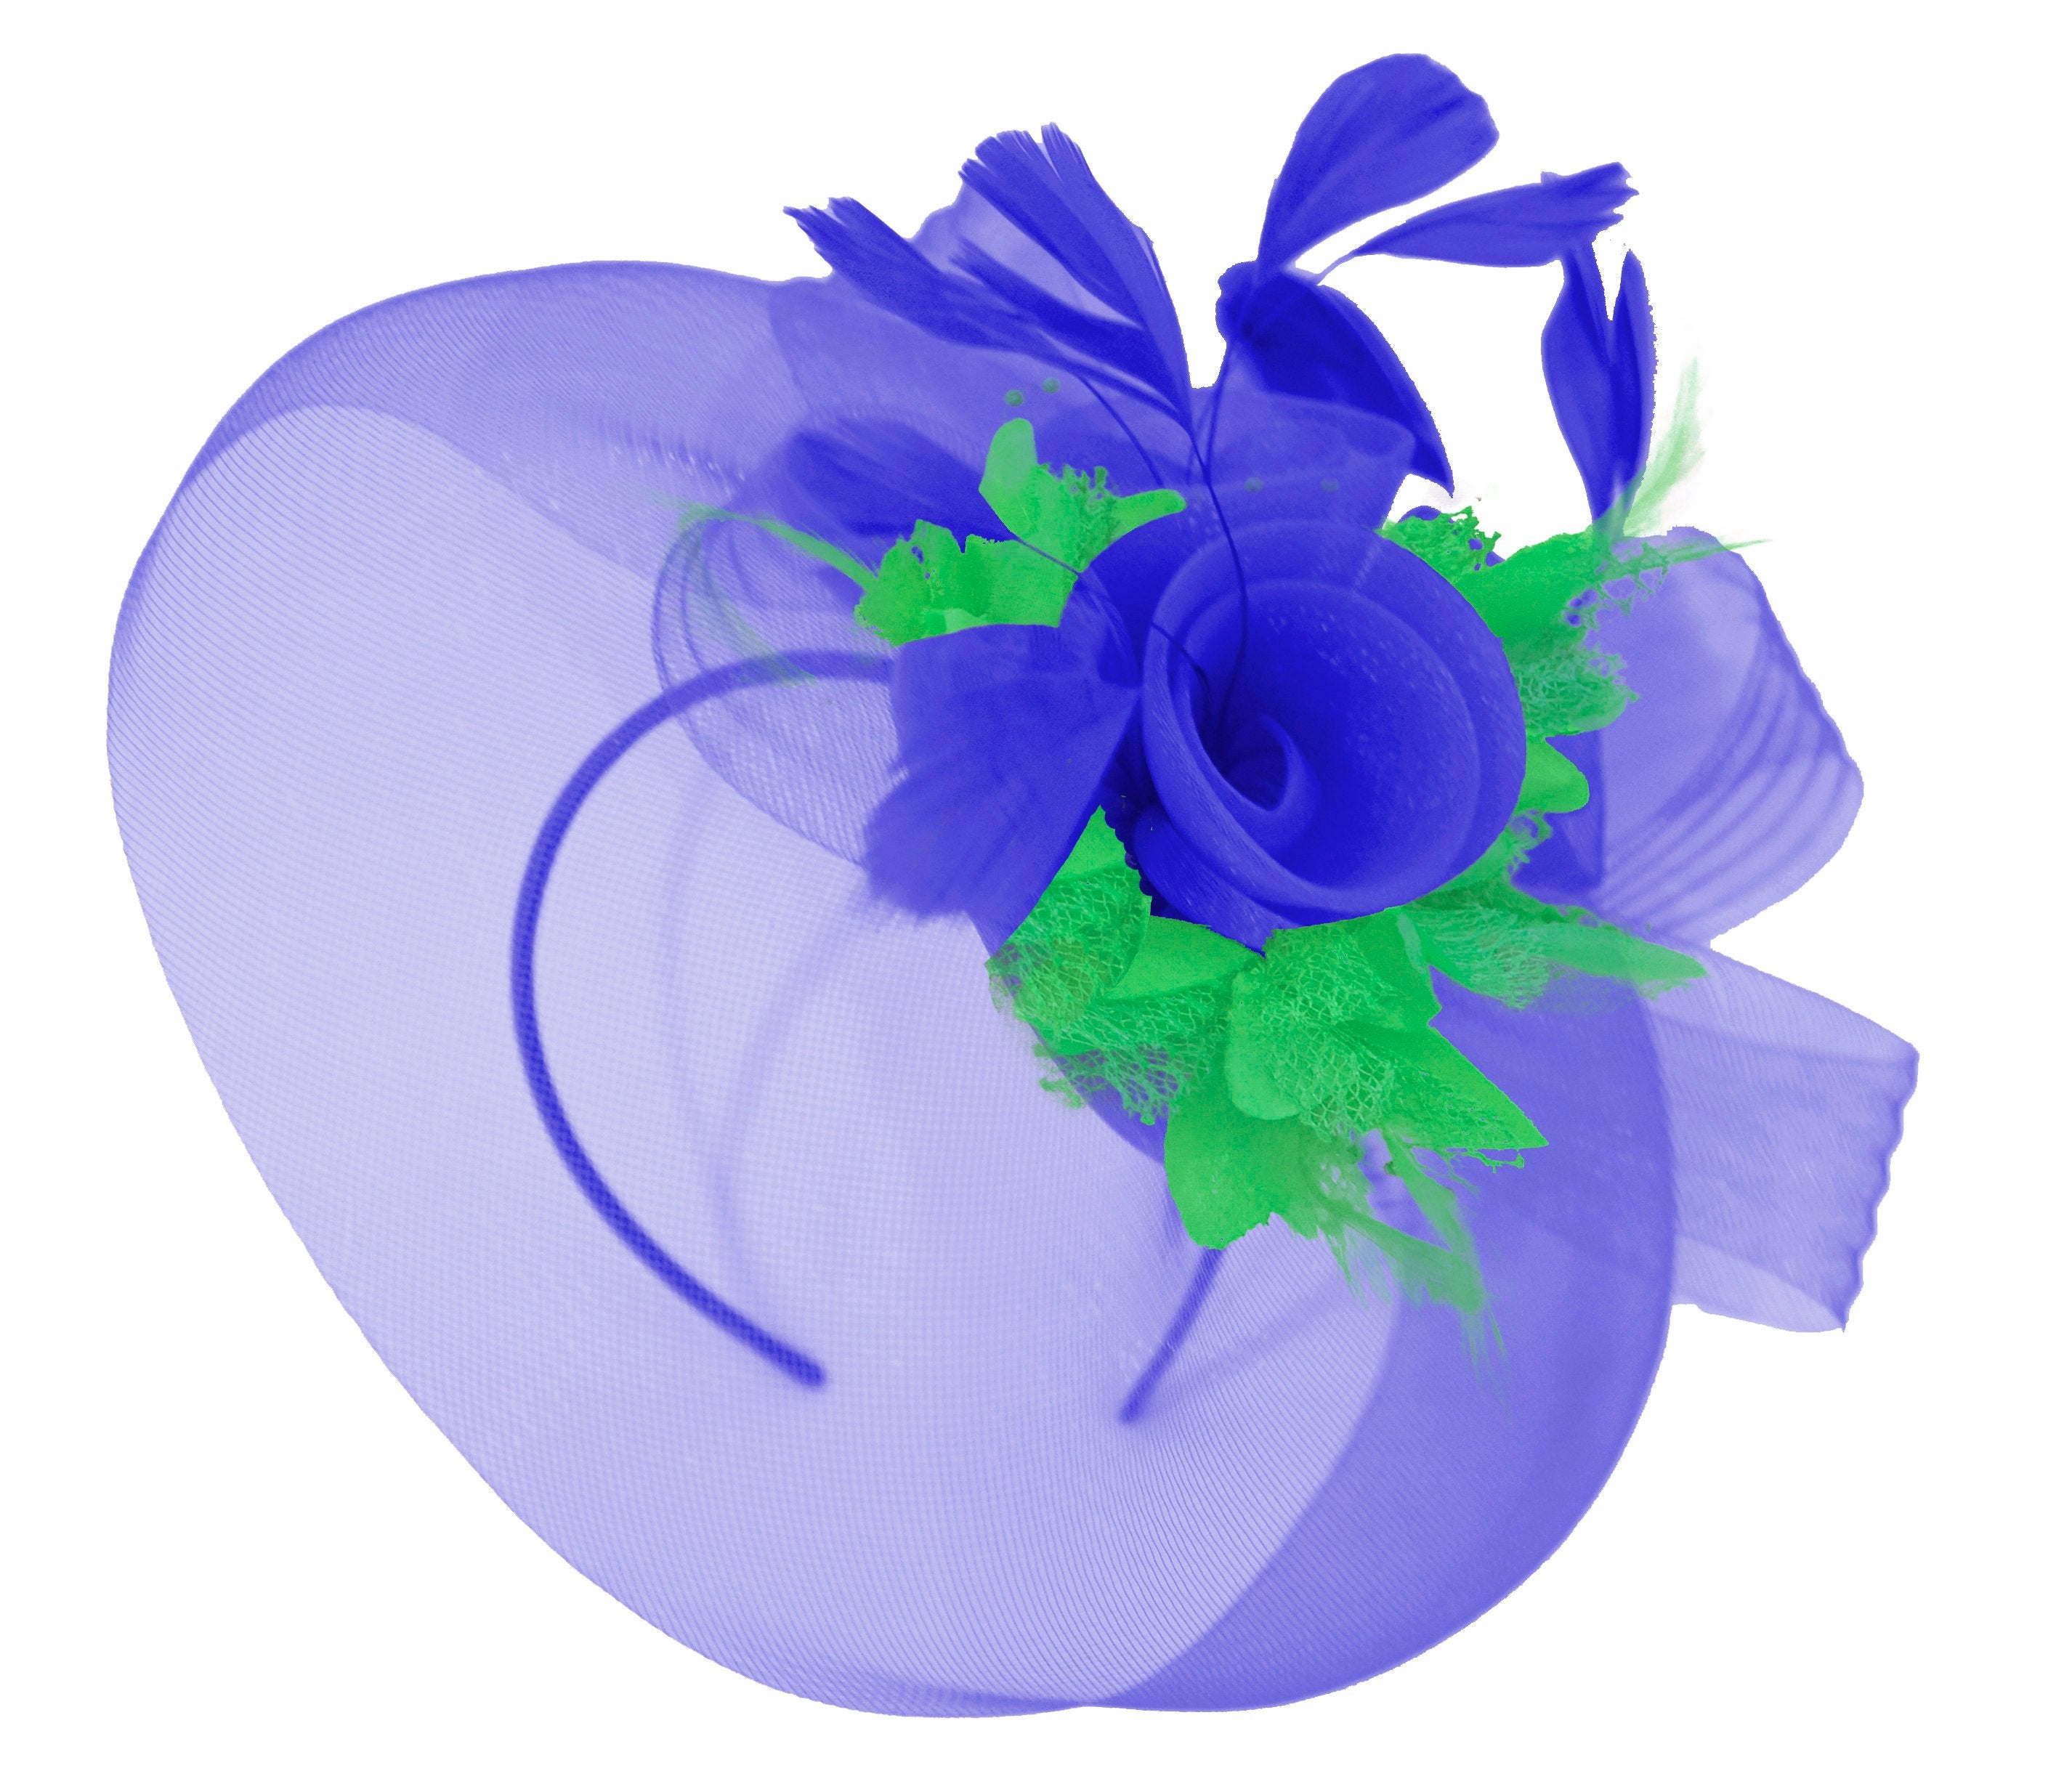 Caprilite Big Royal Blue and Grass Green Fascinator Hat Veil Net Hair Clip Ascot Derby Races Wedding Headband Feather Flower